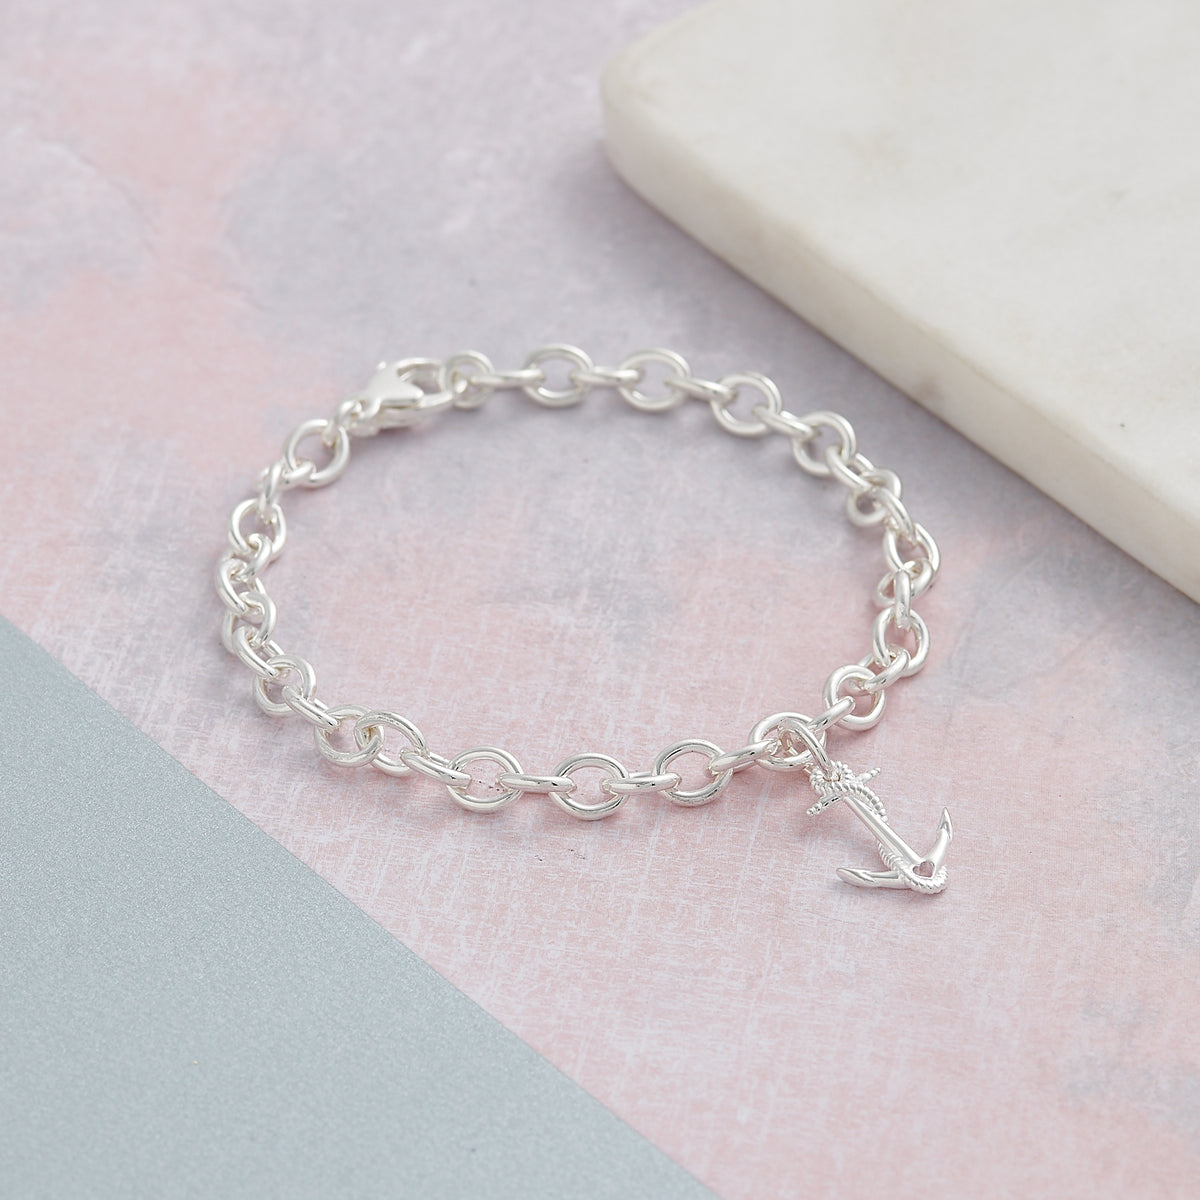 Solid sterling silver anchor charm bracelet designer Scarlett Jewellery